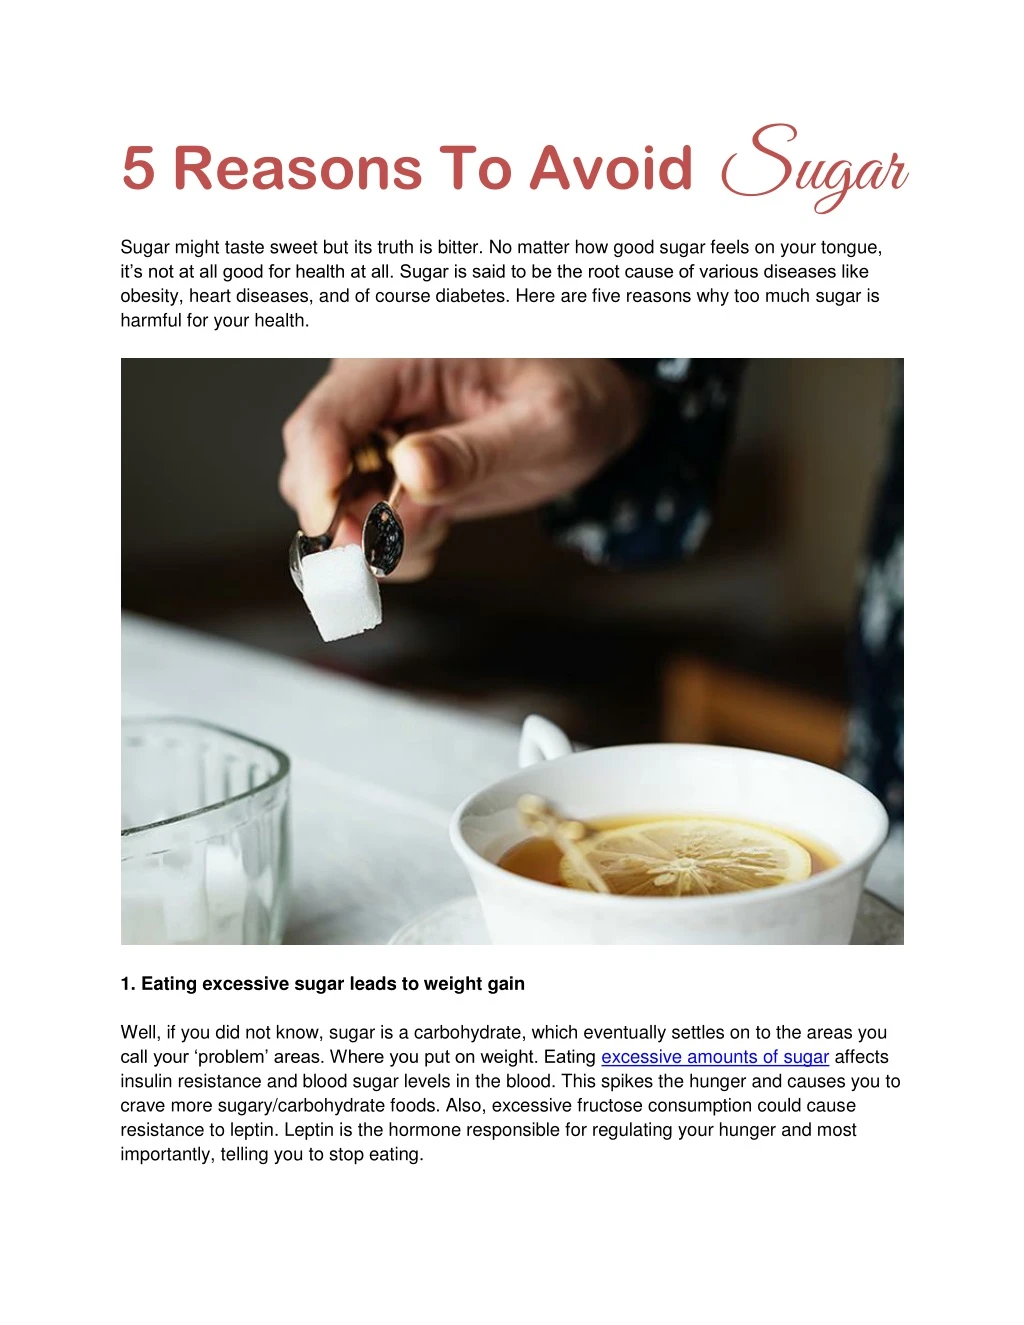 5 reasons to avoid sugar